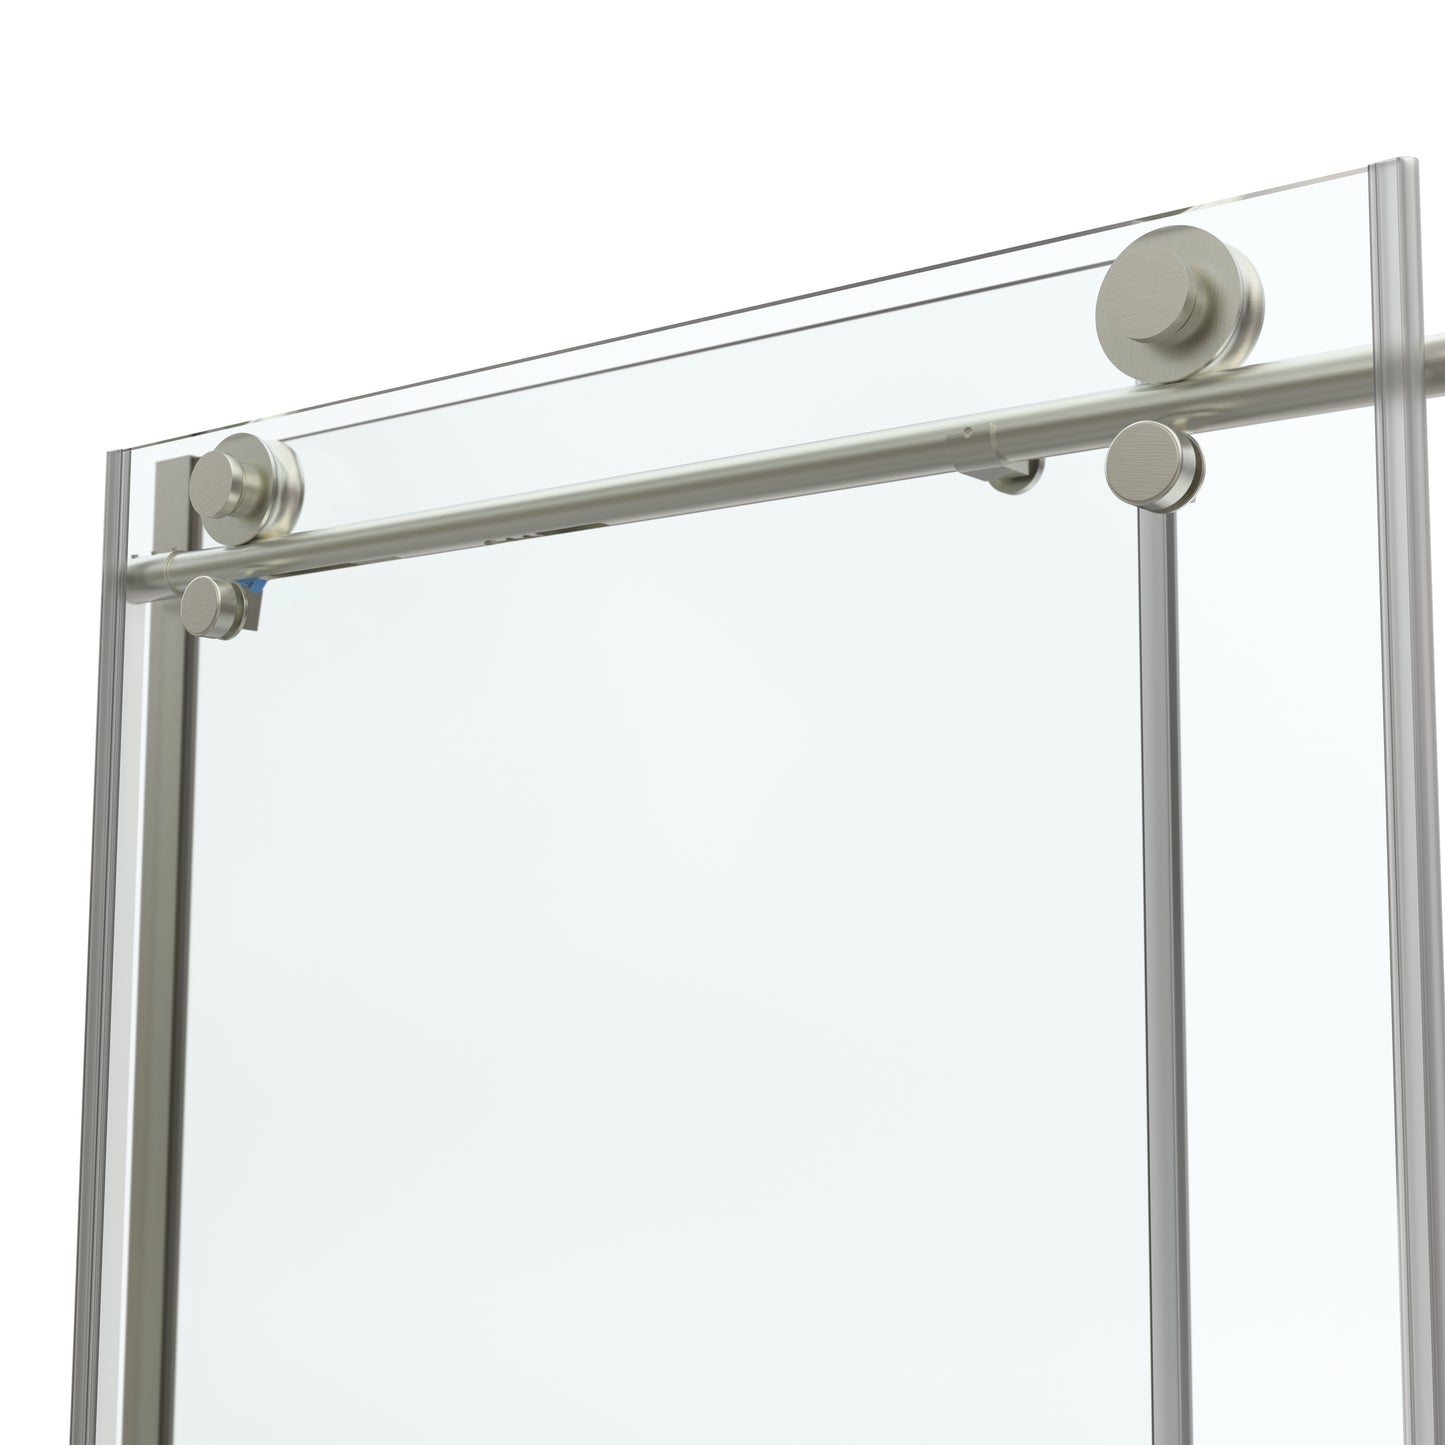 57-60 in. W x 76 in. H Sliding Semi-Frameless Shower Door Brushed Nickel Clear Glass